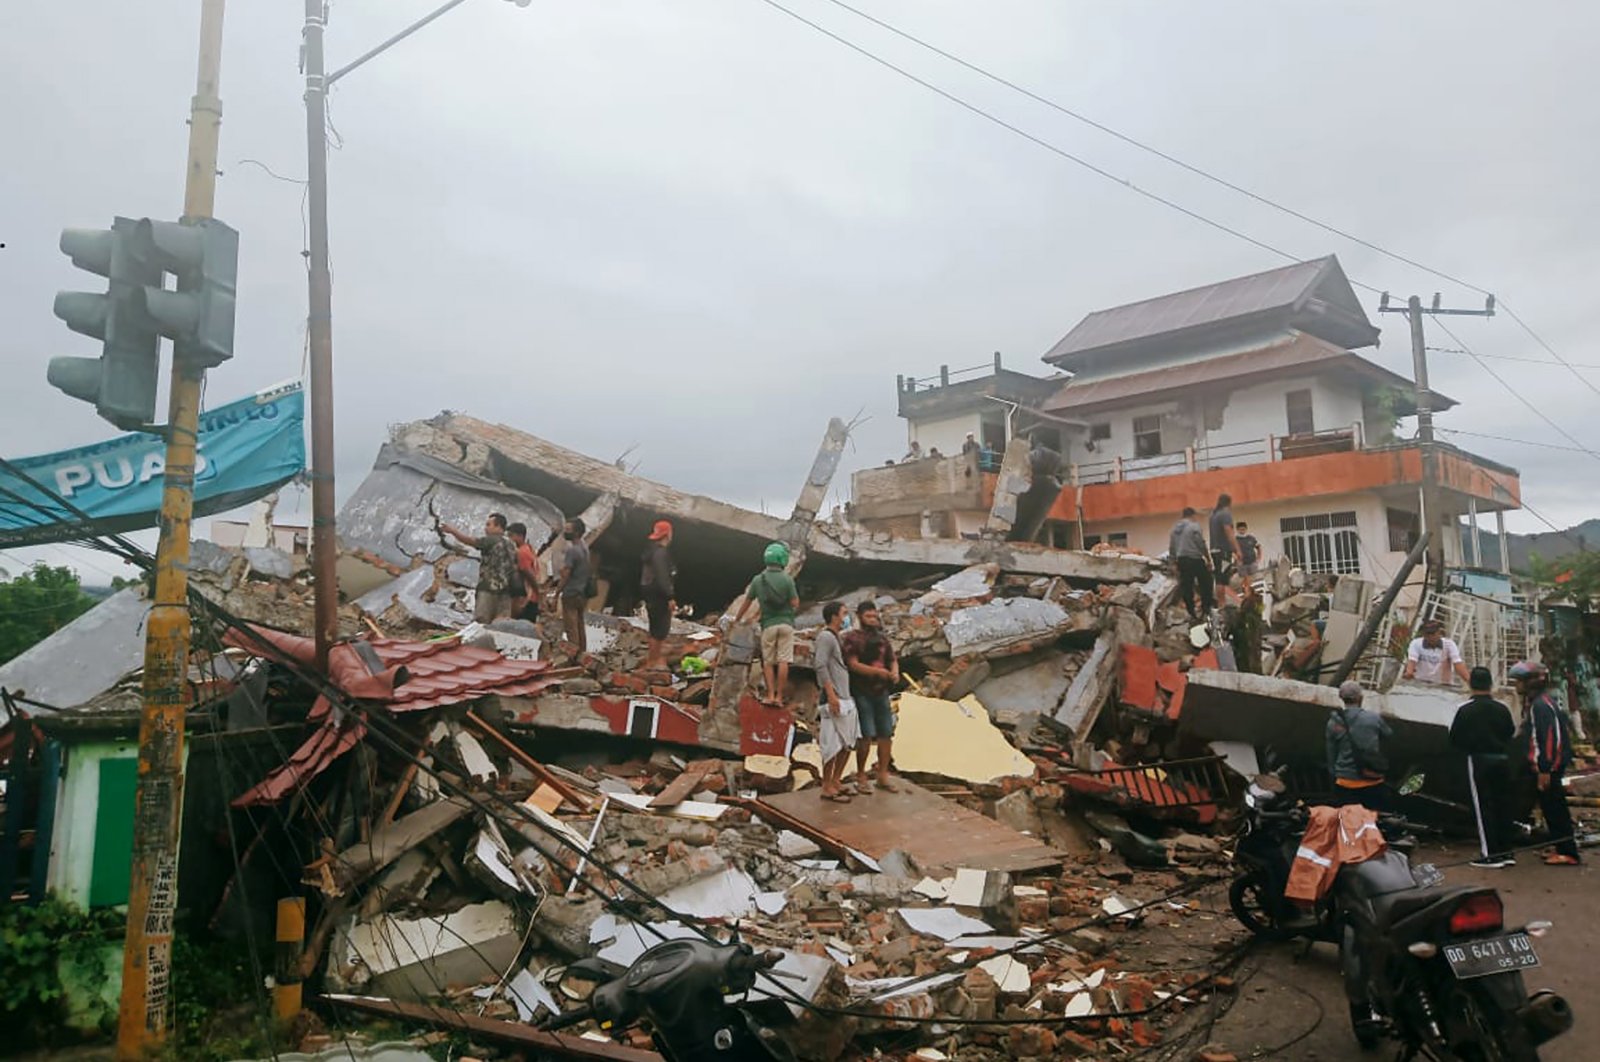 Residents inspect earthquake-damaged buildings in Mamuju, West Sulawesi, Indonesia, Jan. 15, 2021. (AP Photo)